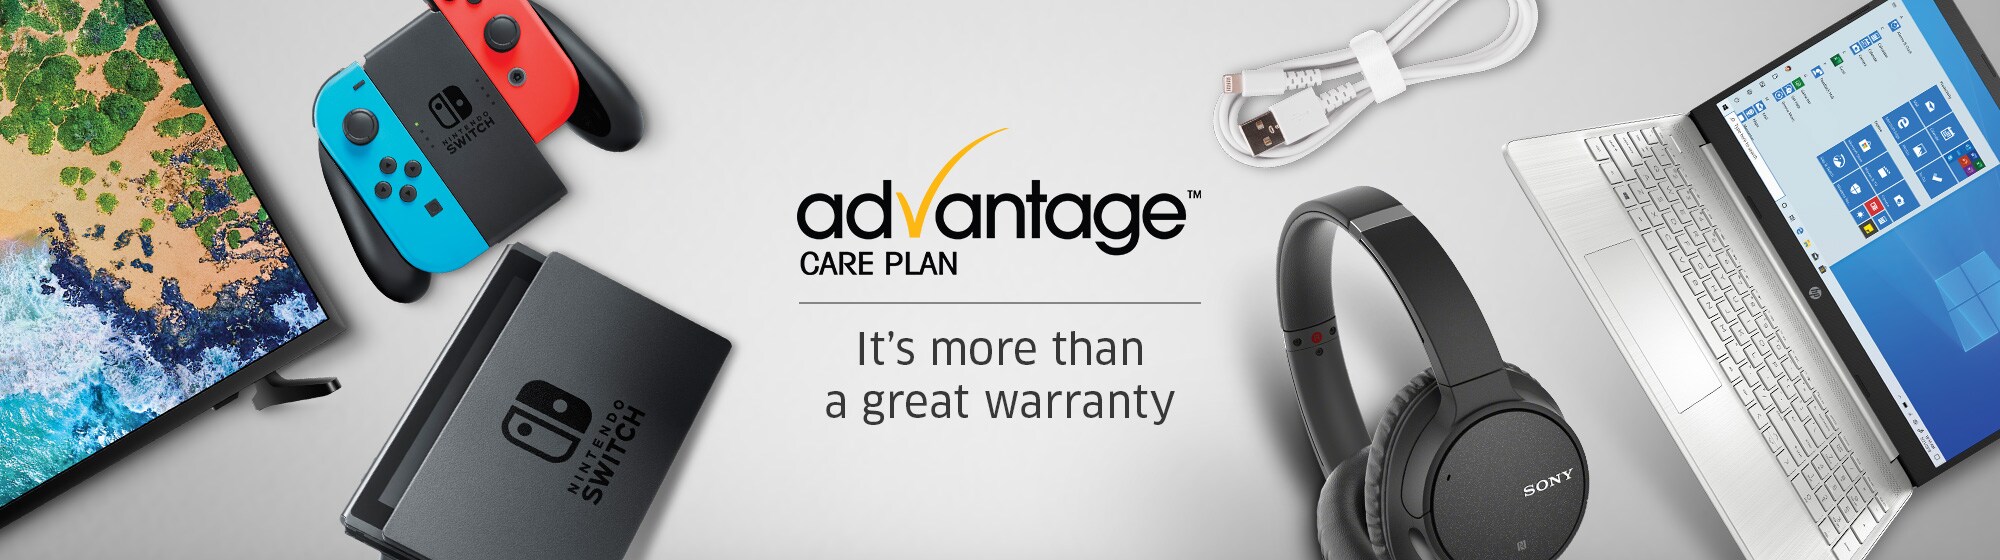 Advantage Care Plan It’s more than a great warranty